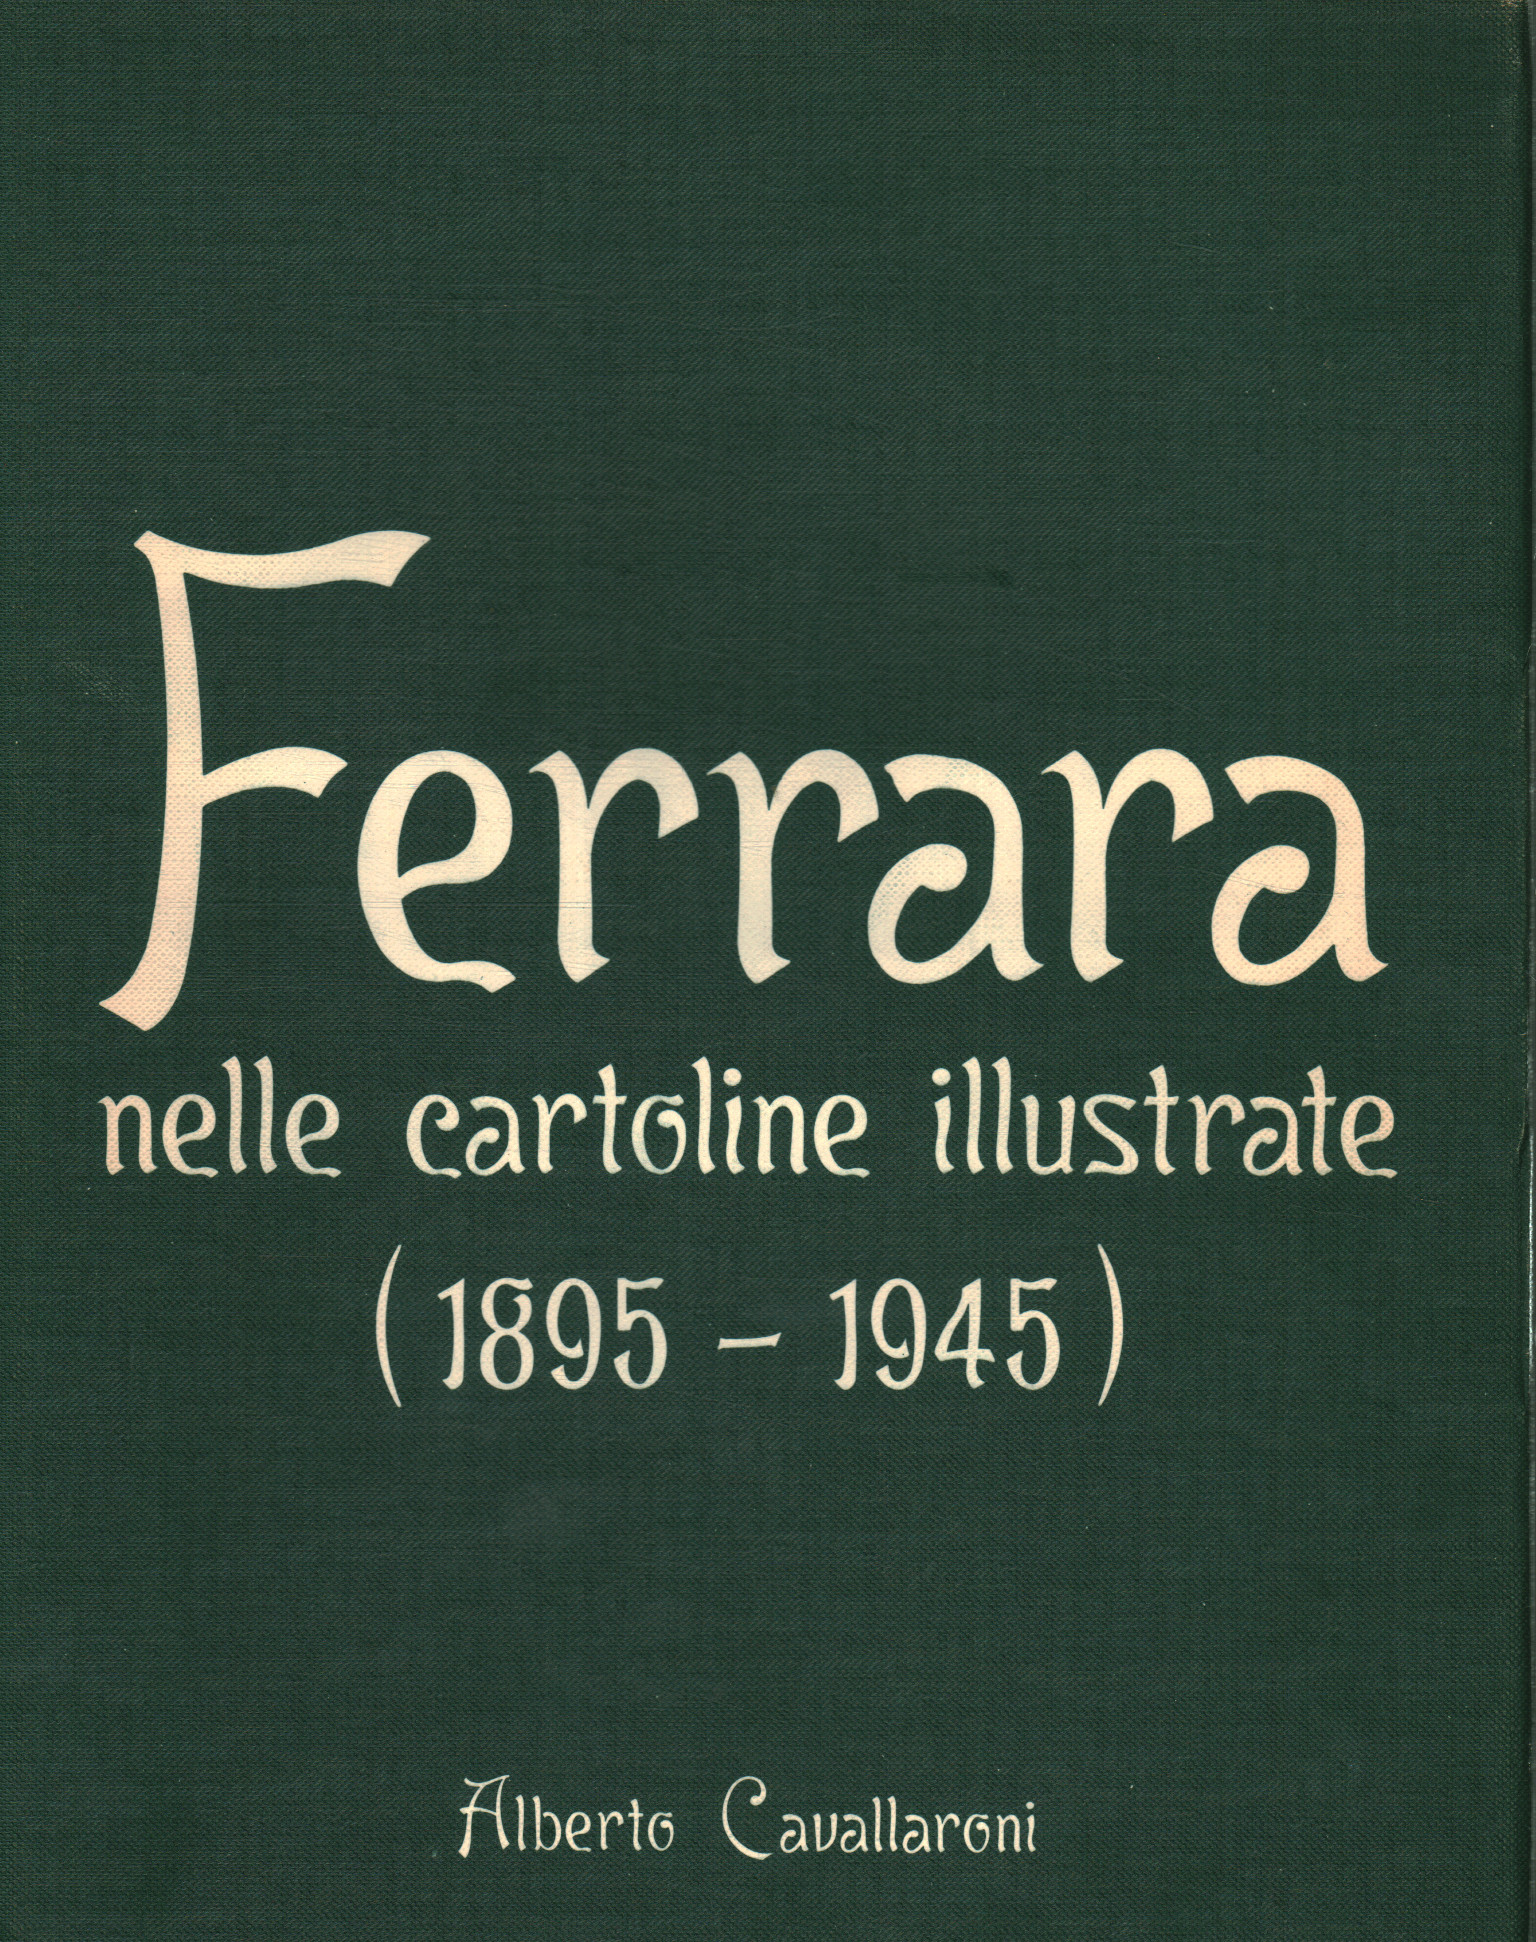 Ferrara nelle cartoline illustrate (1895-1